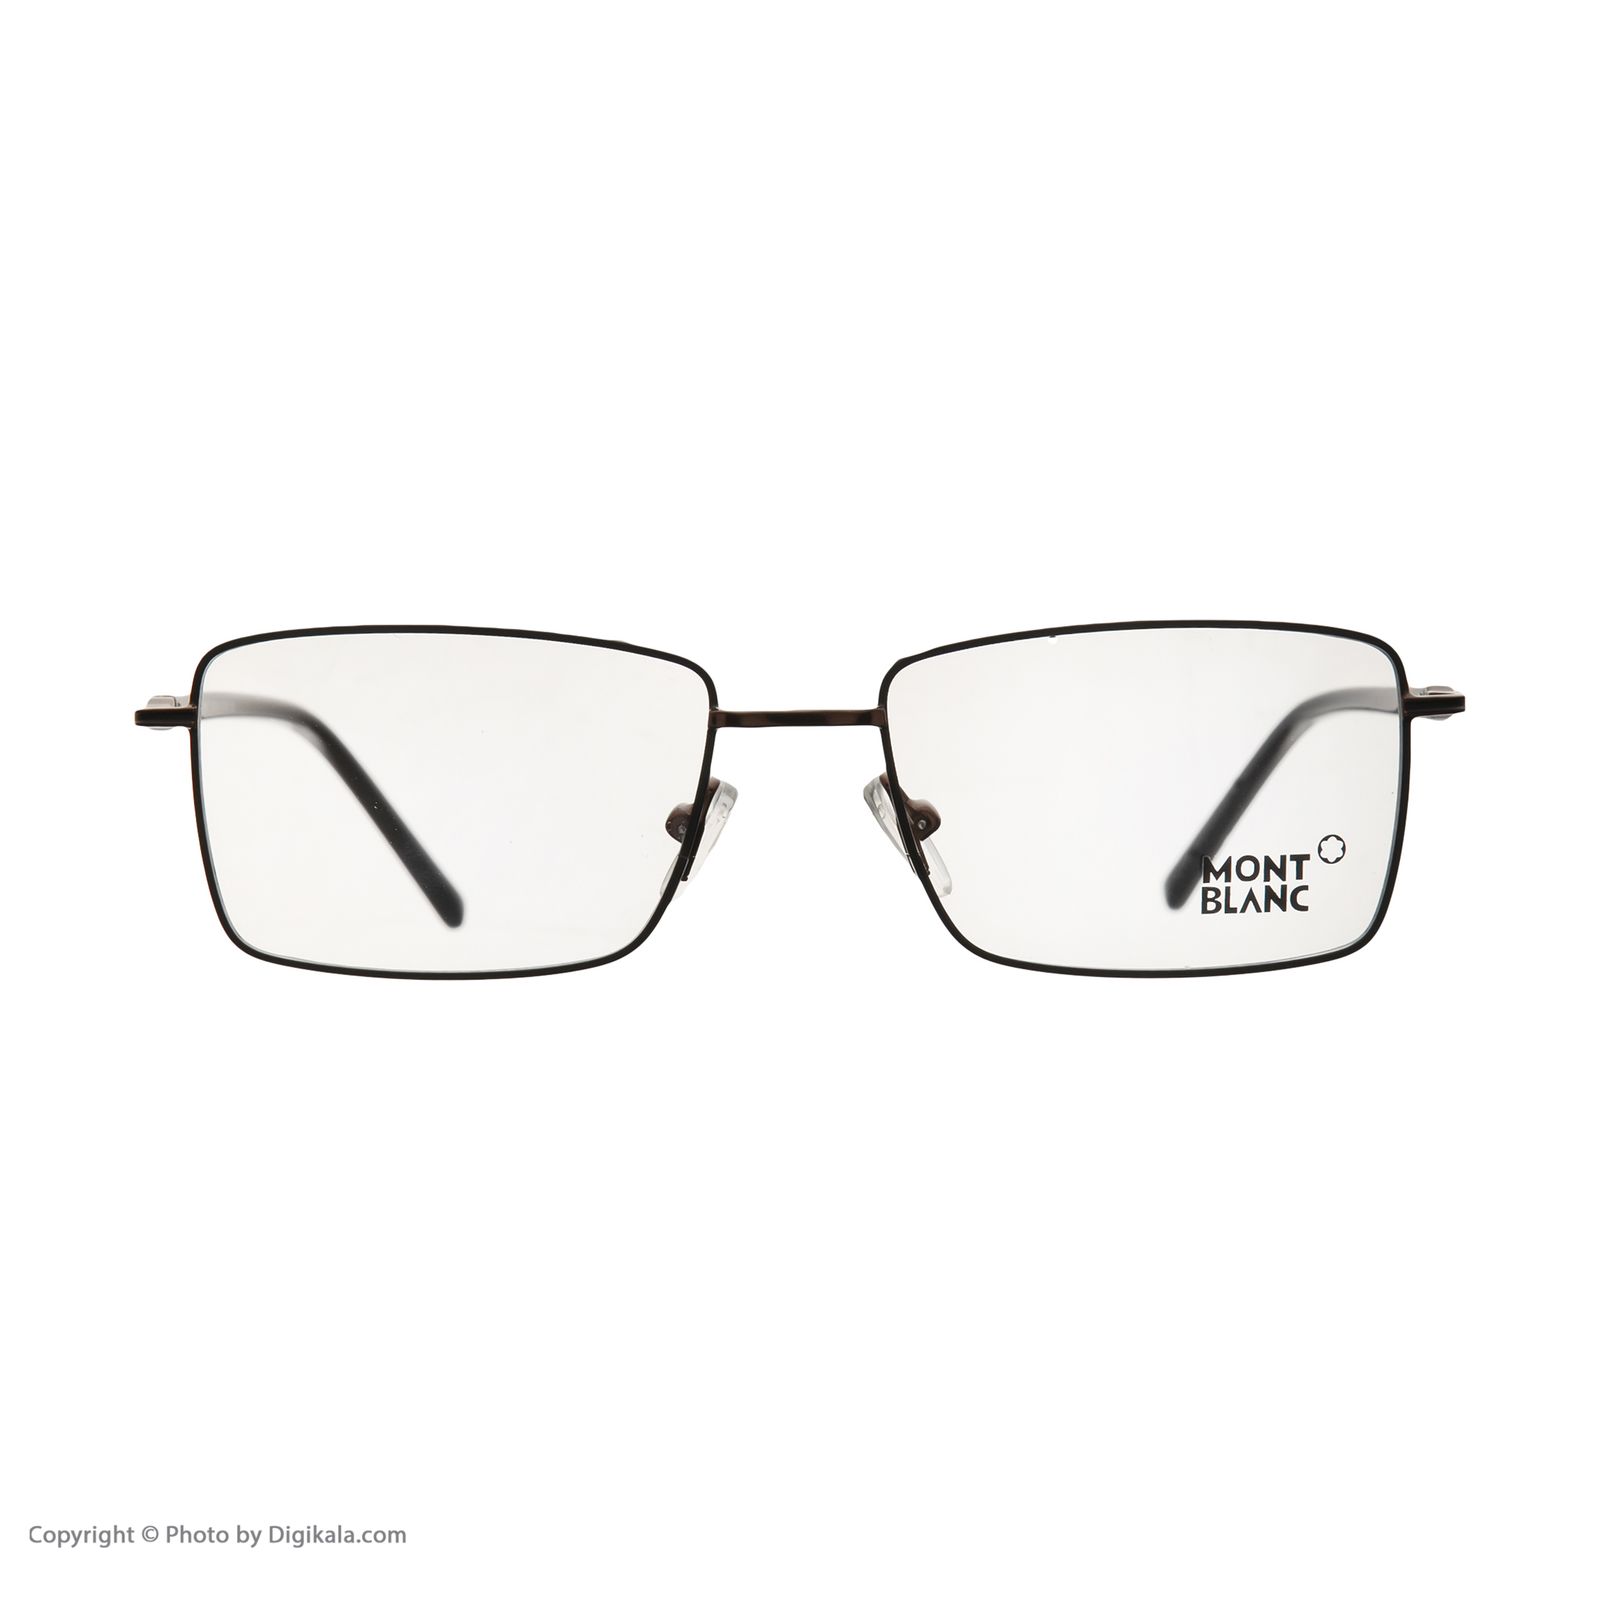 فریم عینک طبی مون بلان مدل 6926 -  - 5